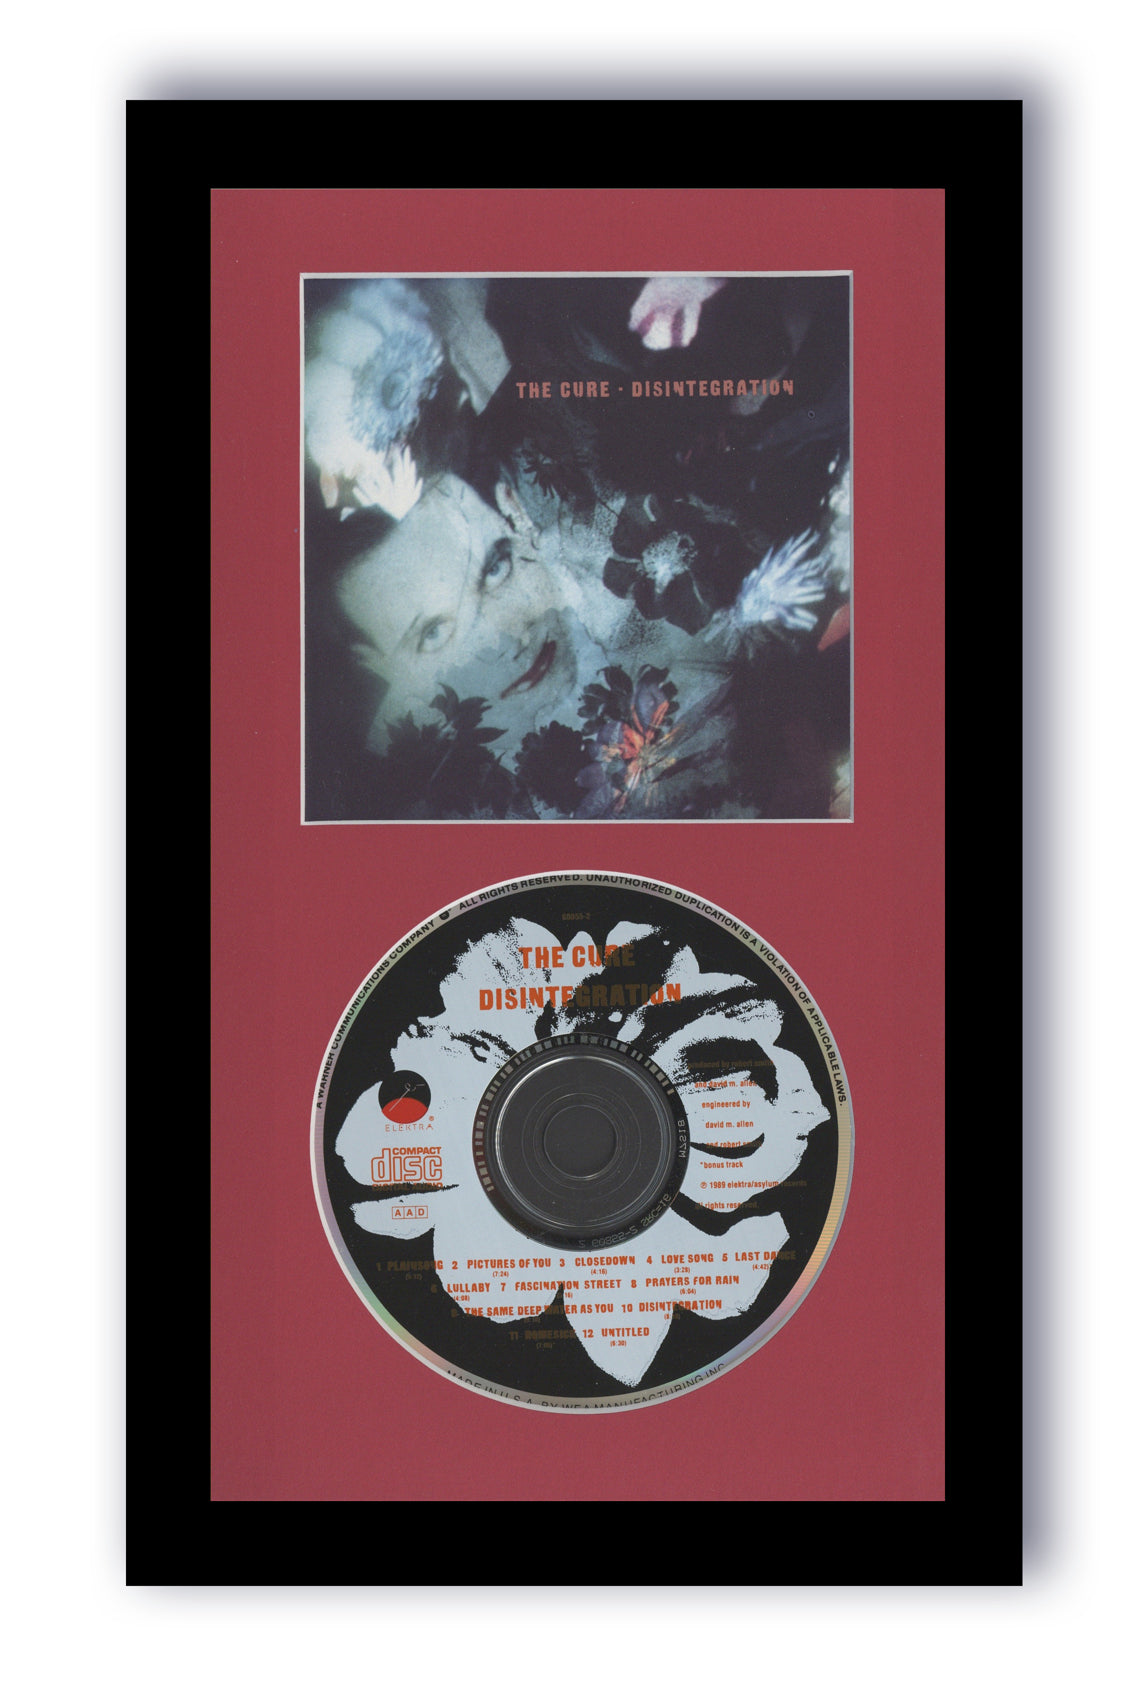 The Cure Custom Framed CD Art Disintegration Robert Smith 80s